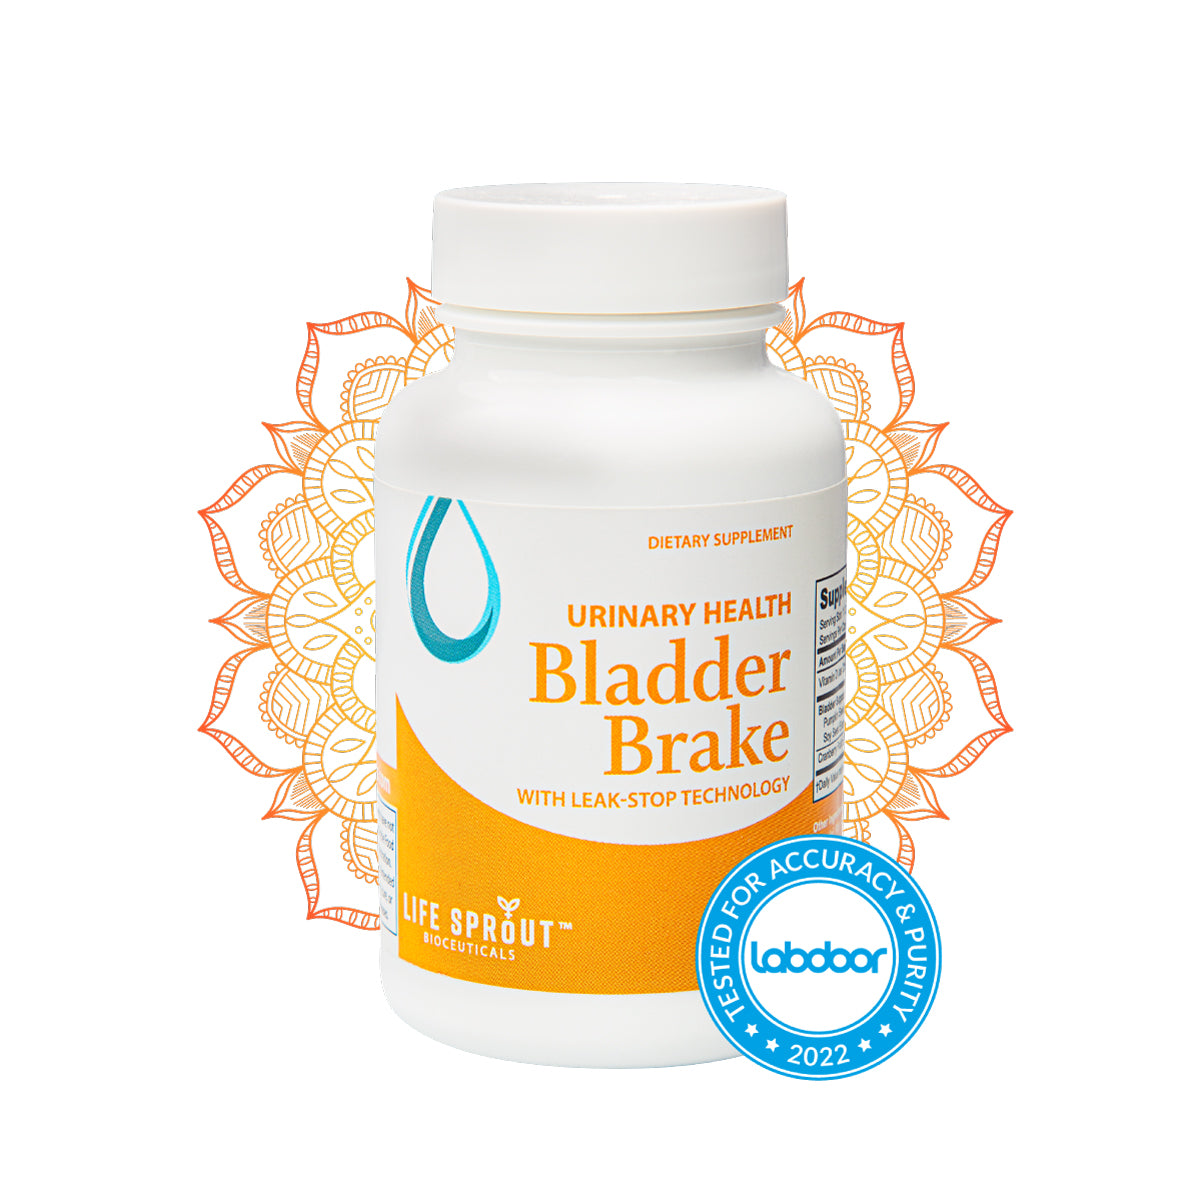 Bladder Brake – With Leak-Stop Technology